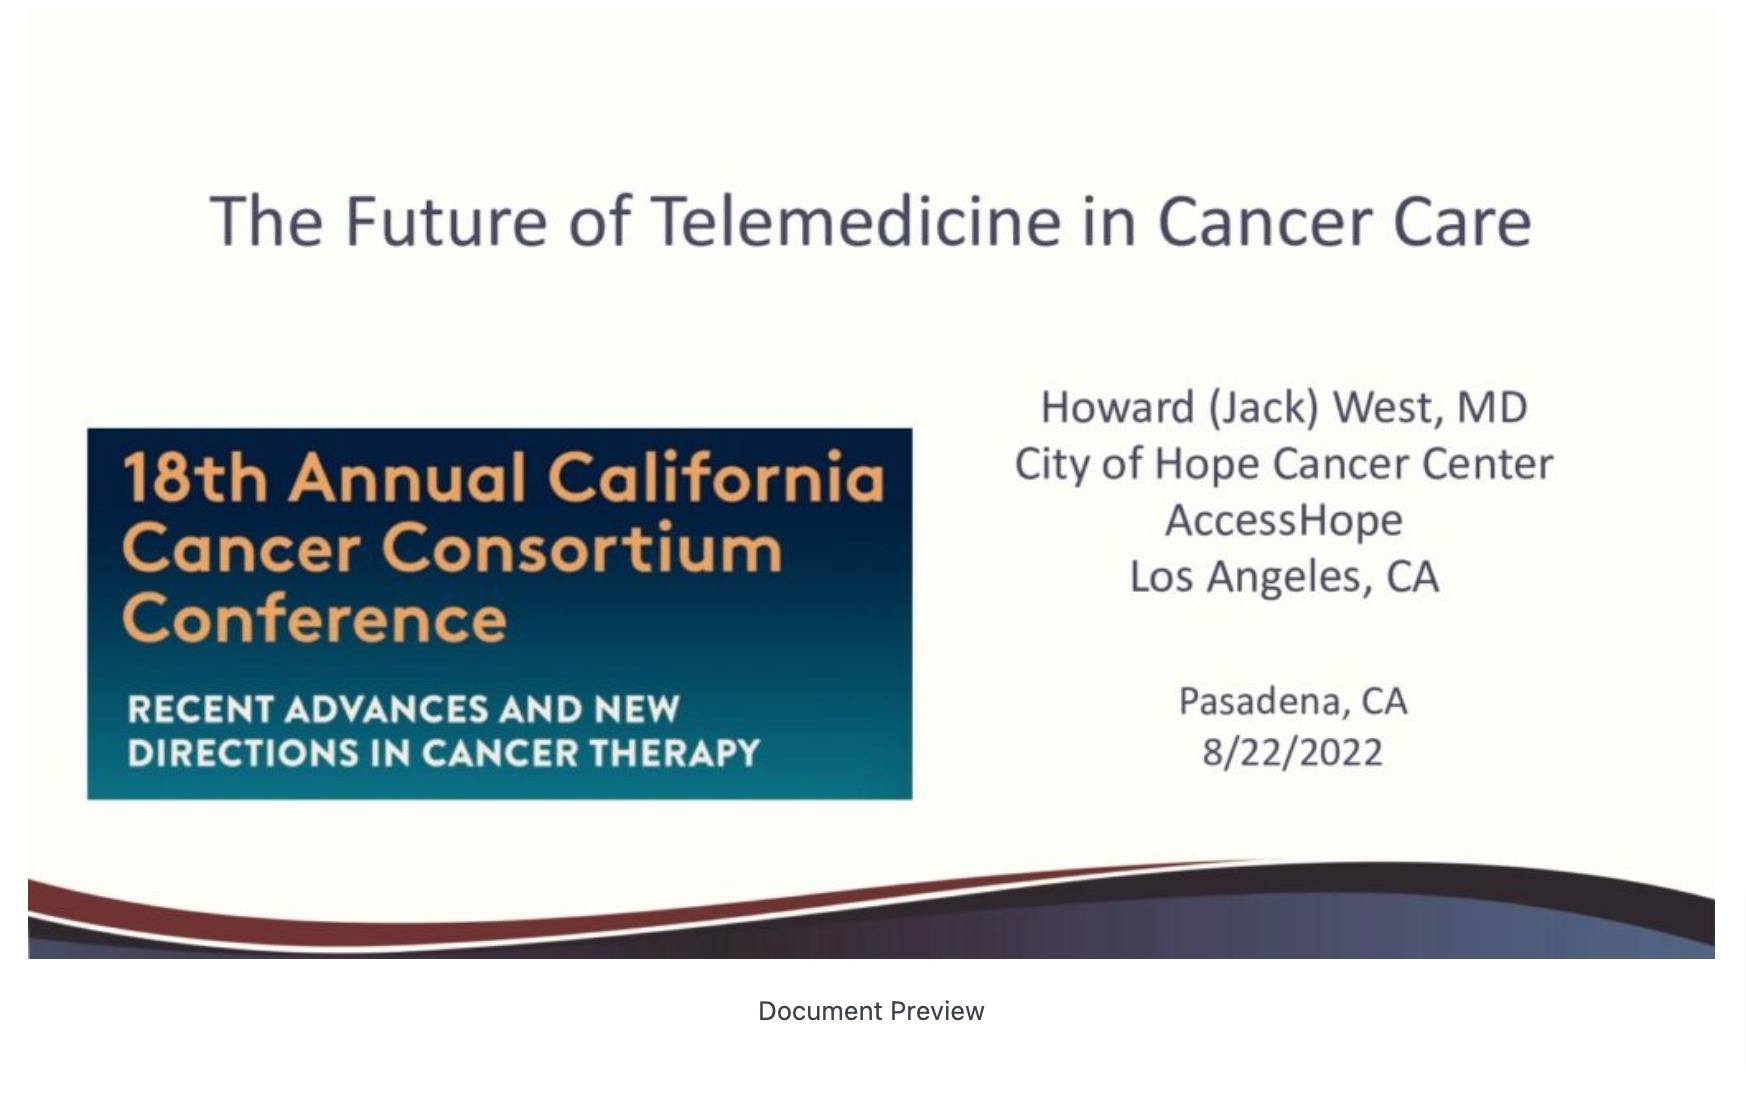 The Future of Telemedicine in Cancer Care